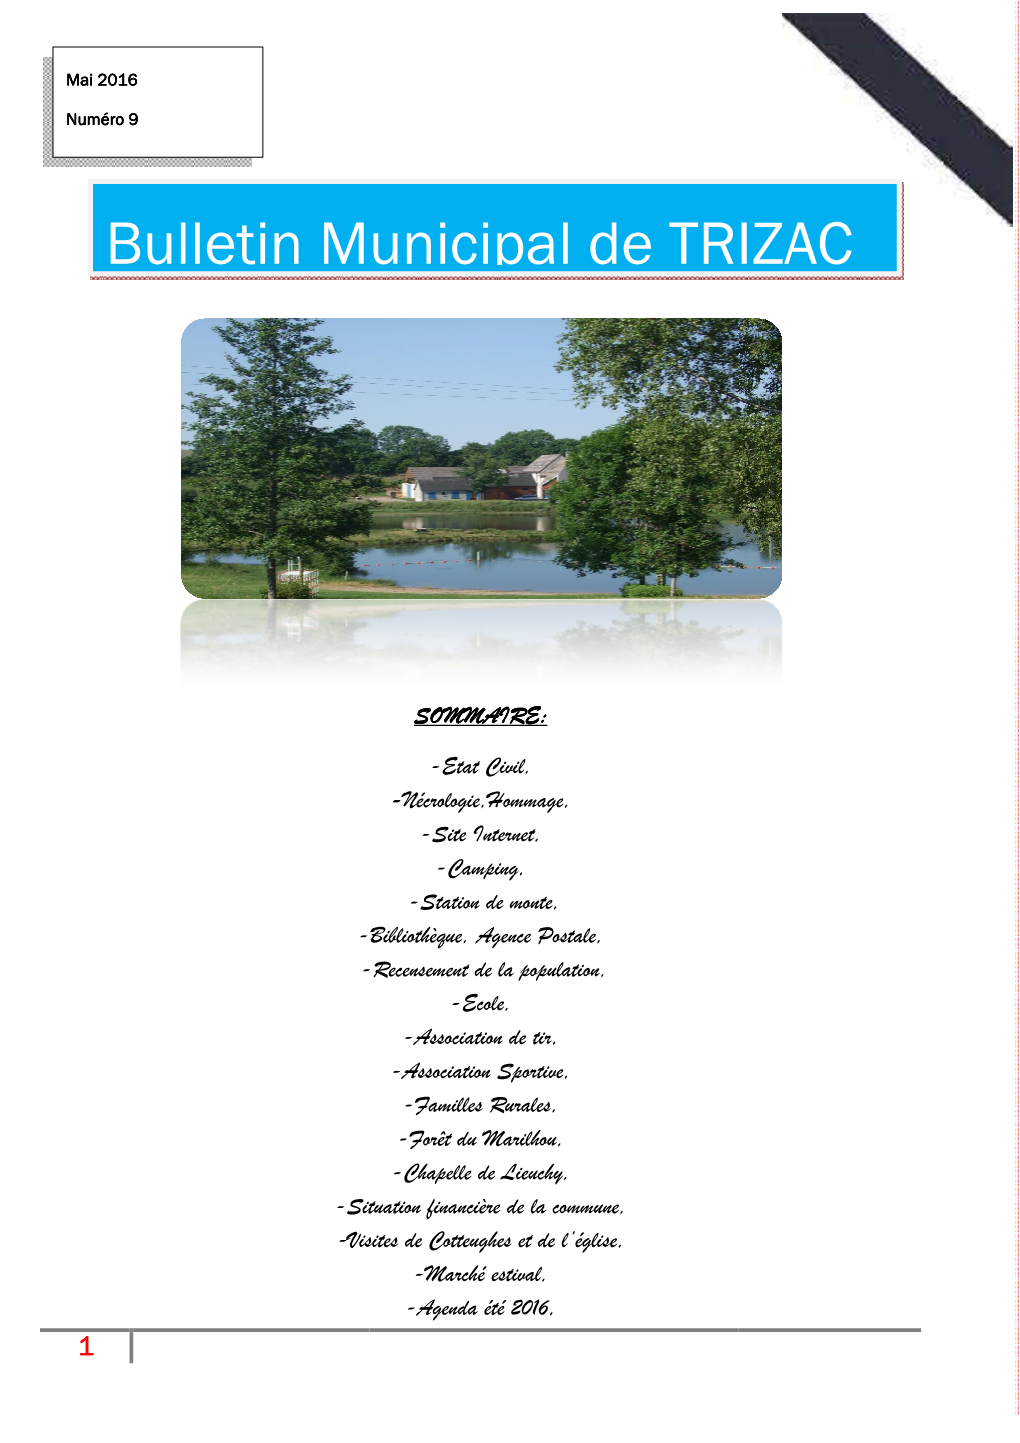 Bulletin Municipal De T Bulletin Municipal De TRIZAC Icipal De